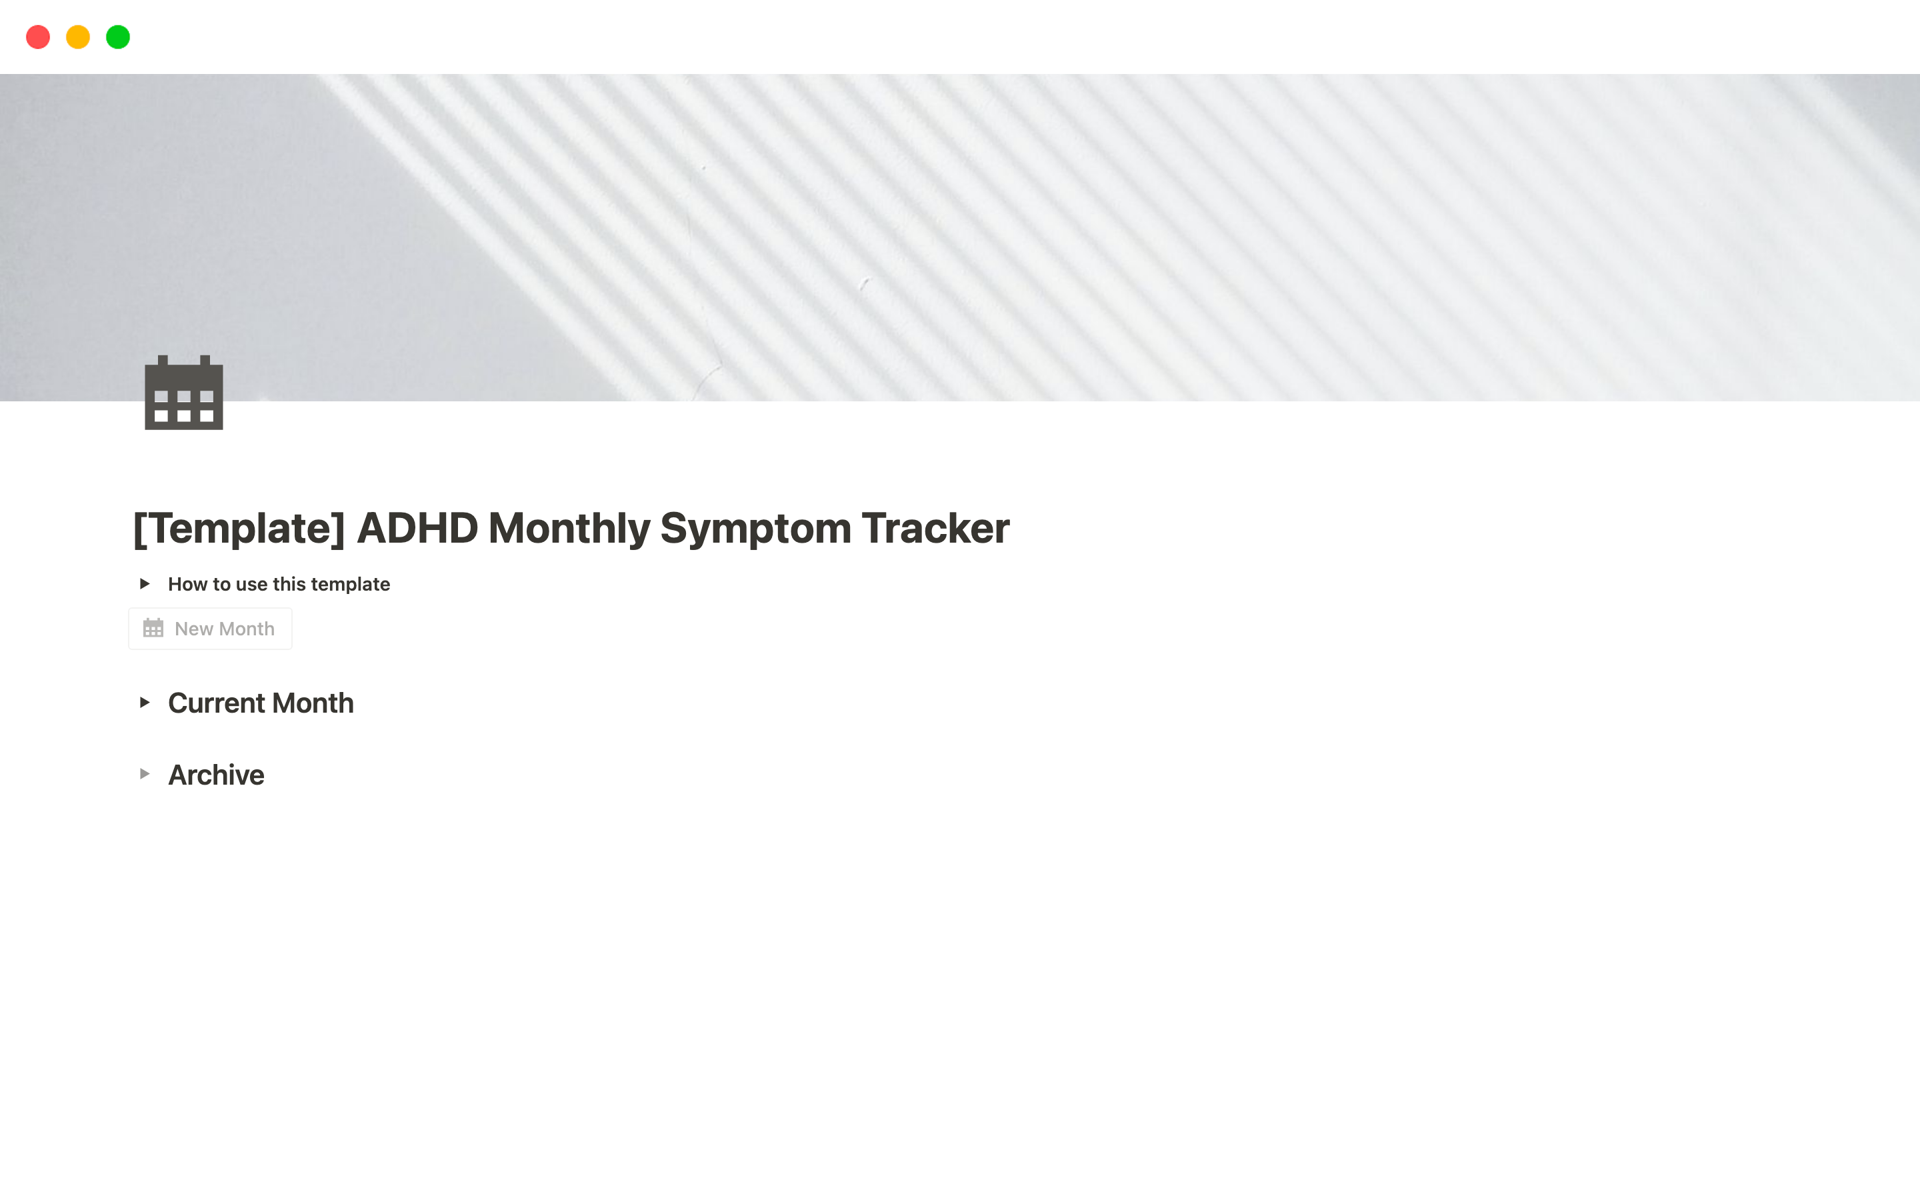 Mallin esikatselu nimelle ADHD Monthly Symptom Tracker